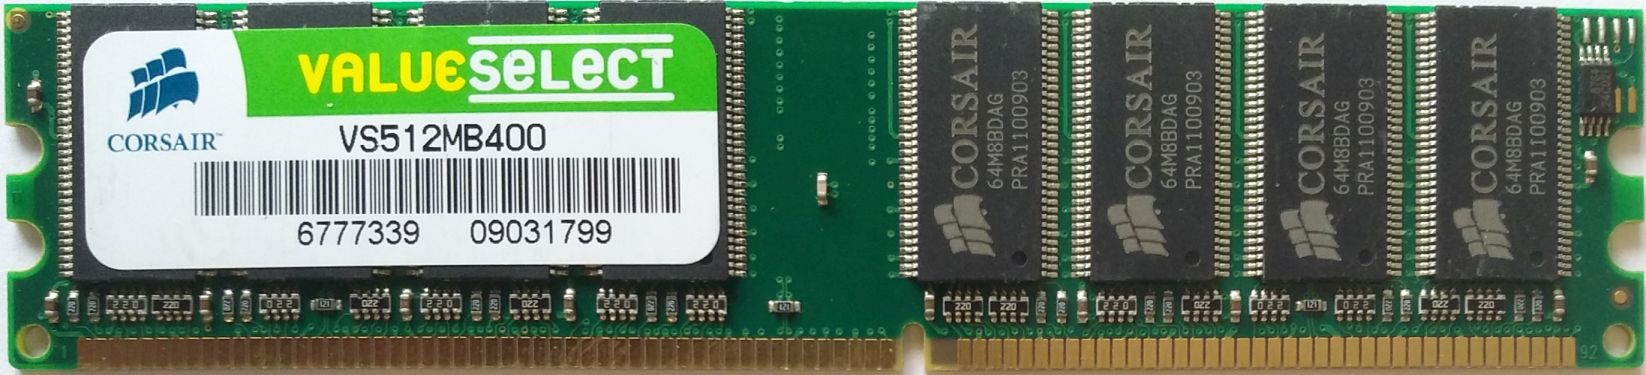 DDR 512MB 400Mhz-PC3200 / Corsair VS512MB400